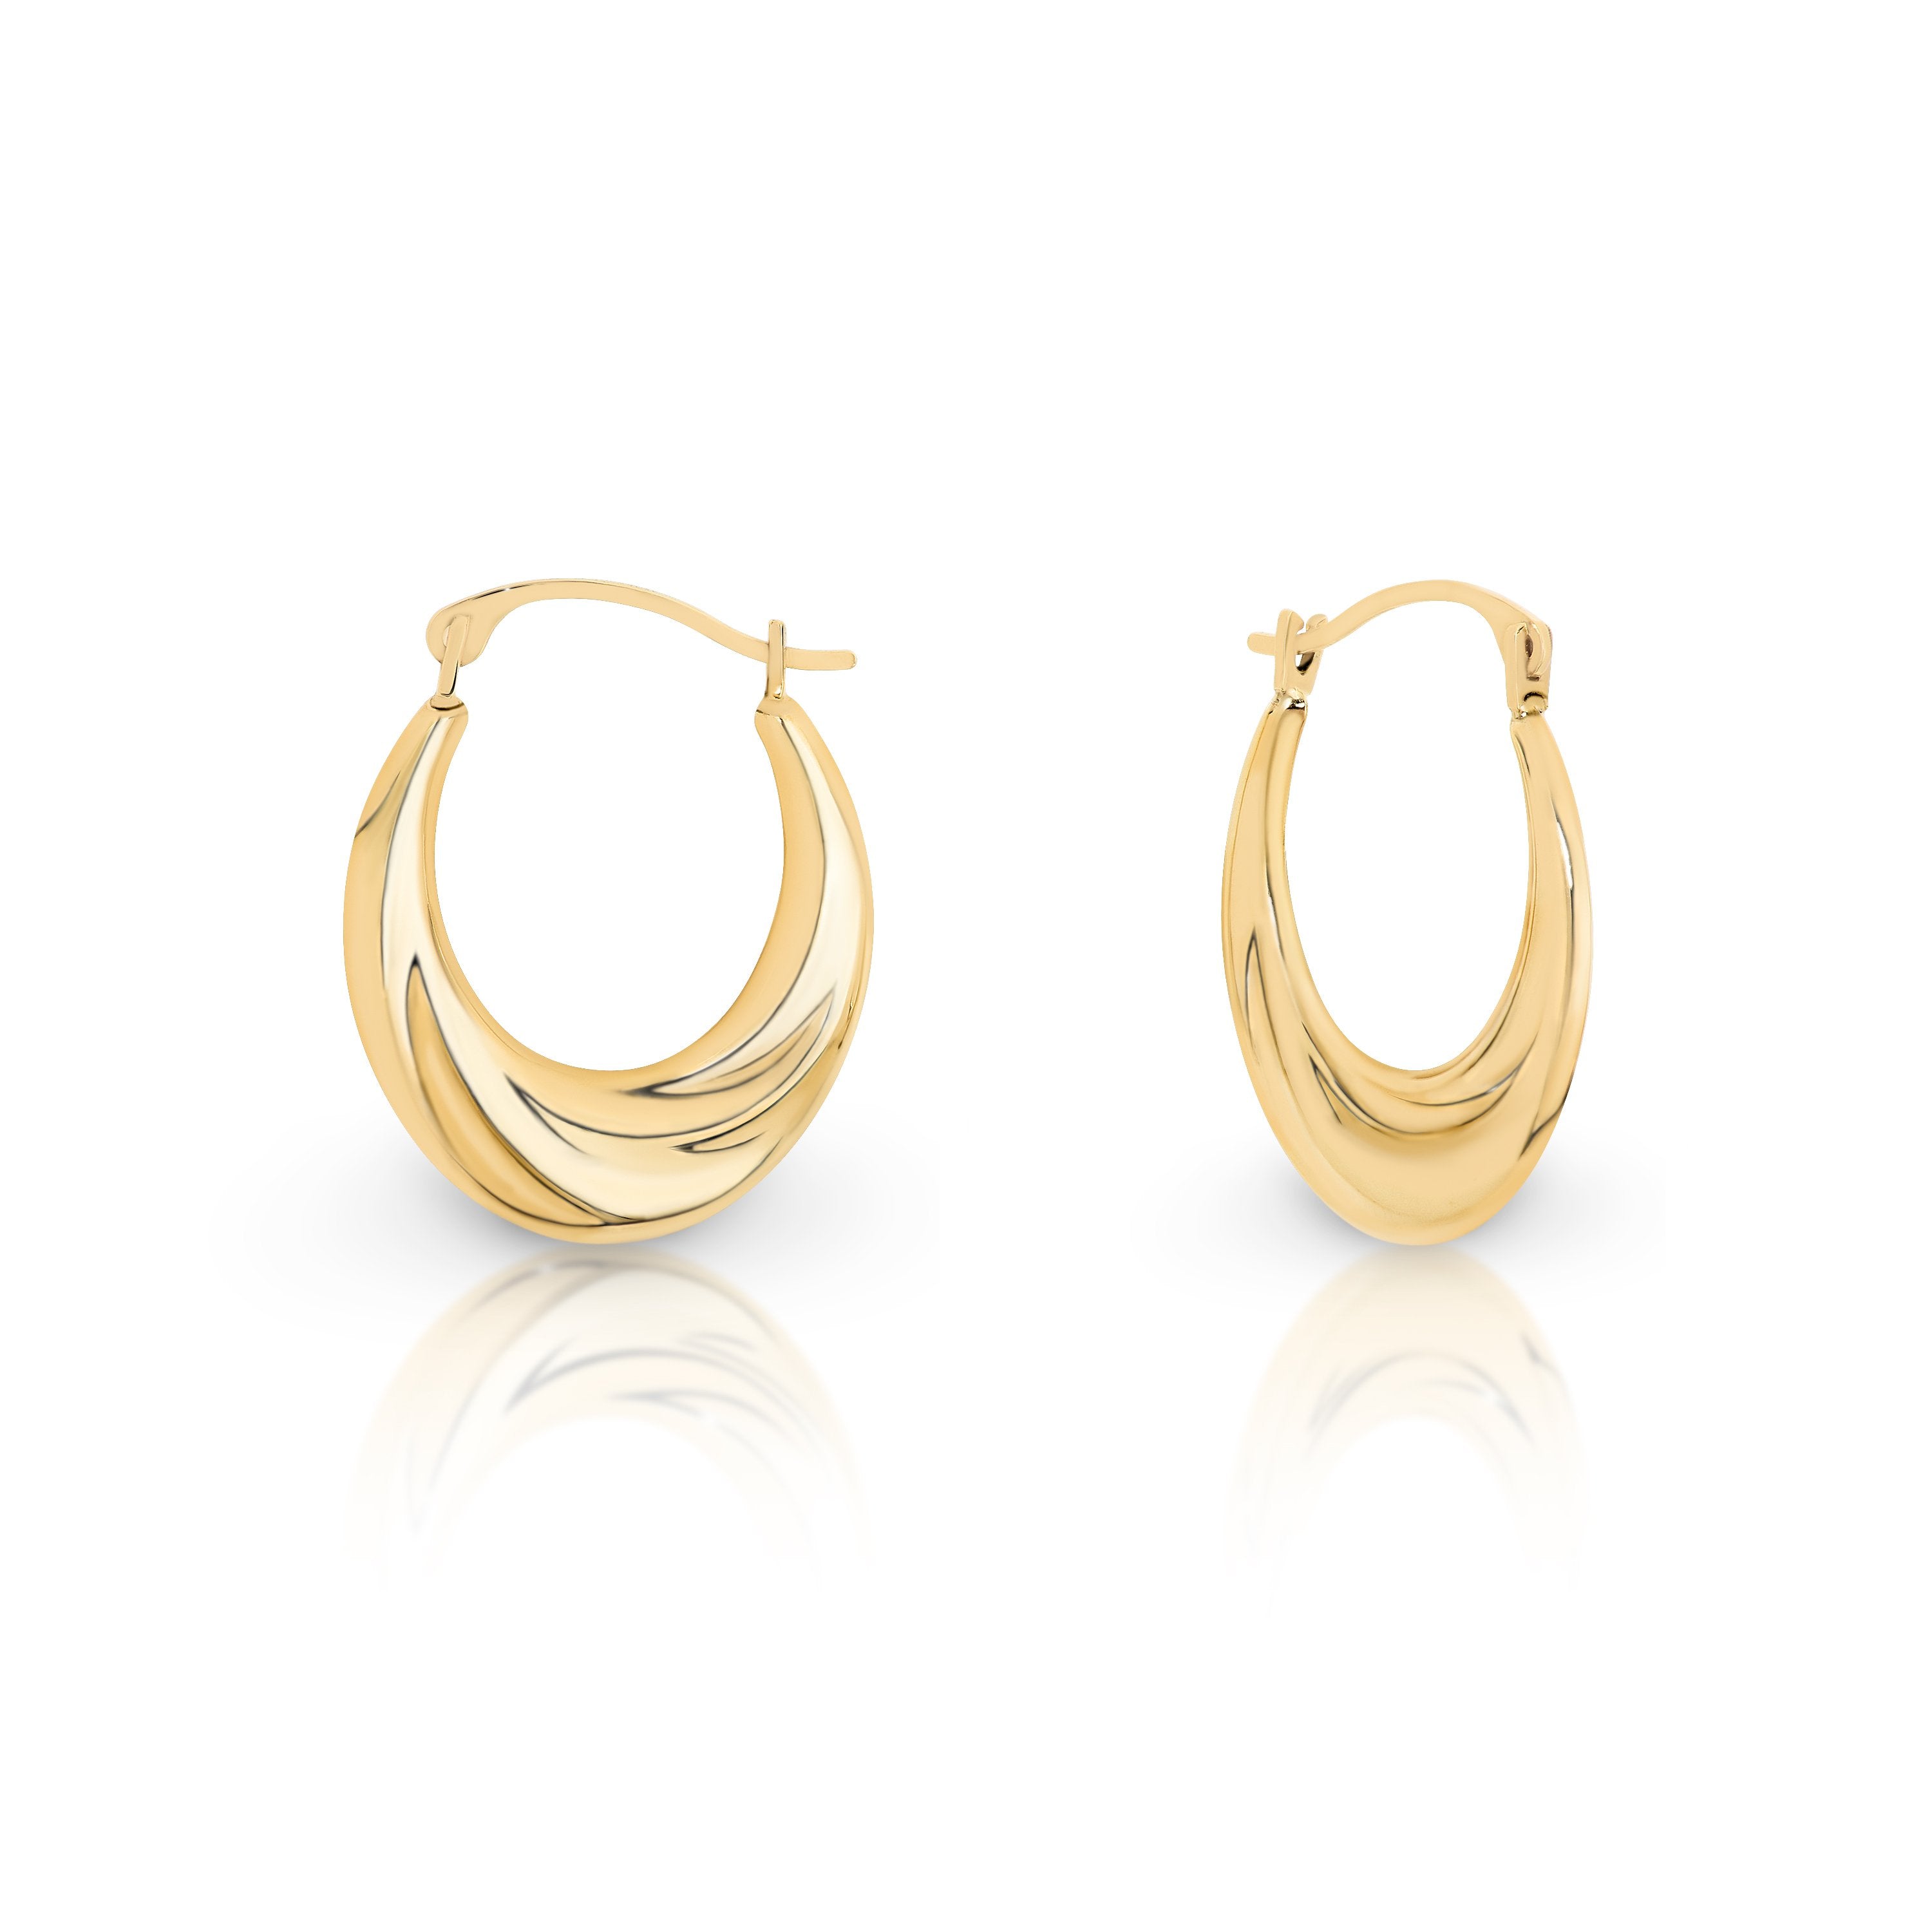 9ct Yellow Gold Oval Twist Creole Earrings